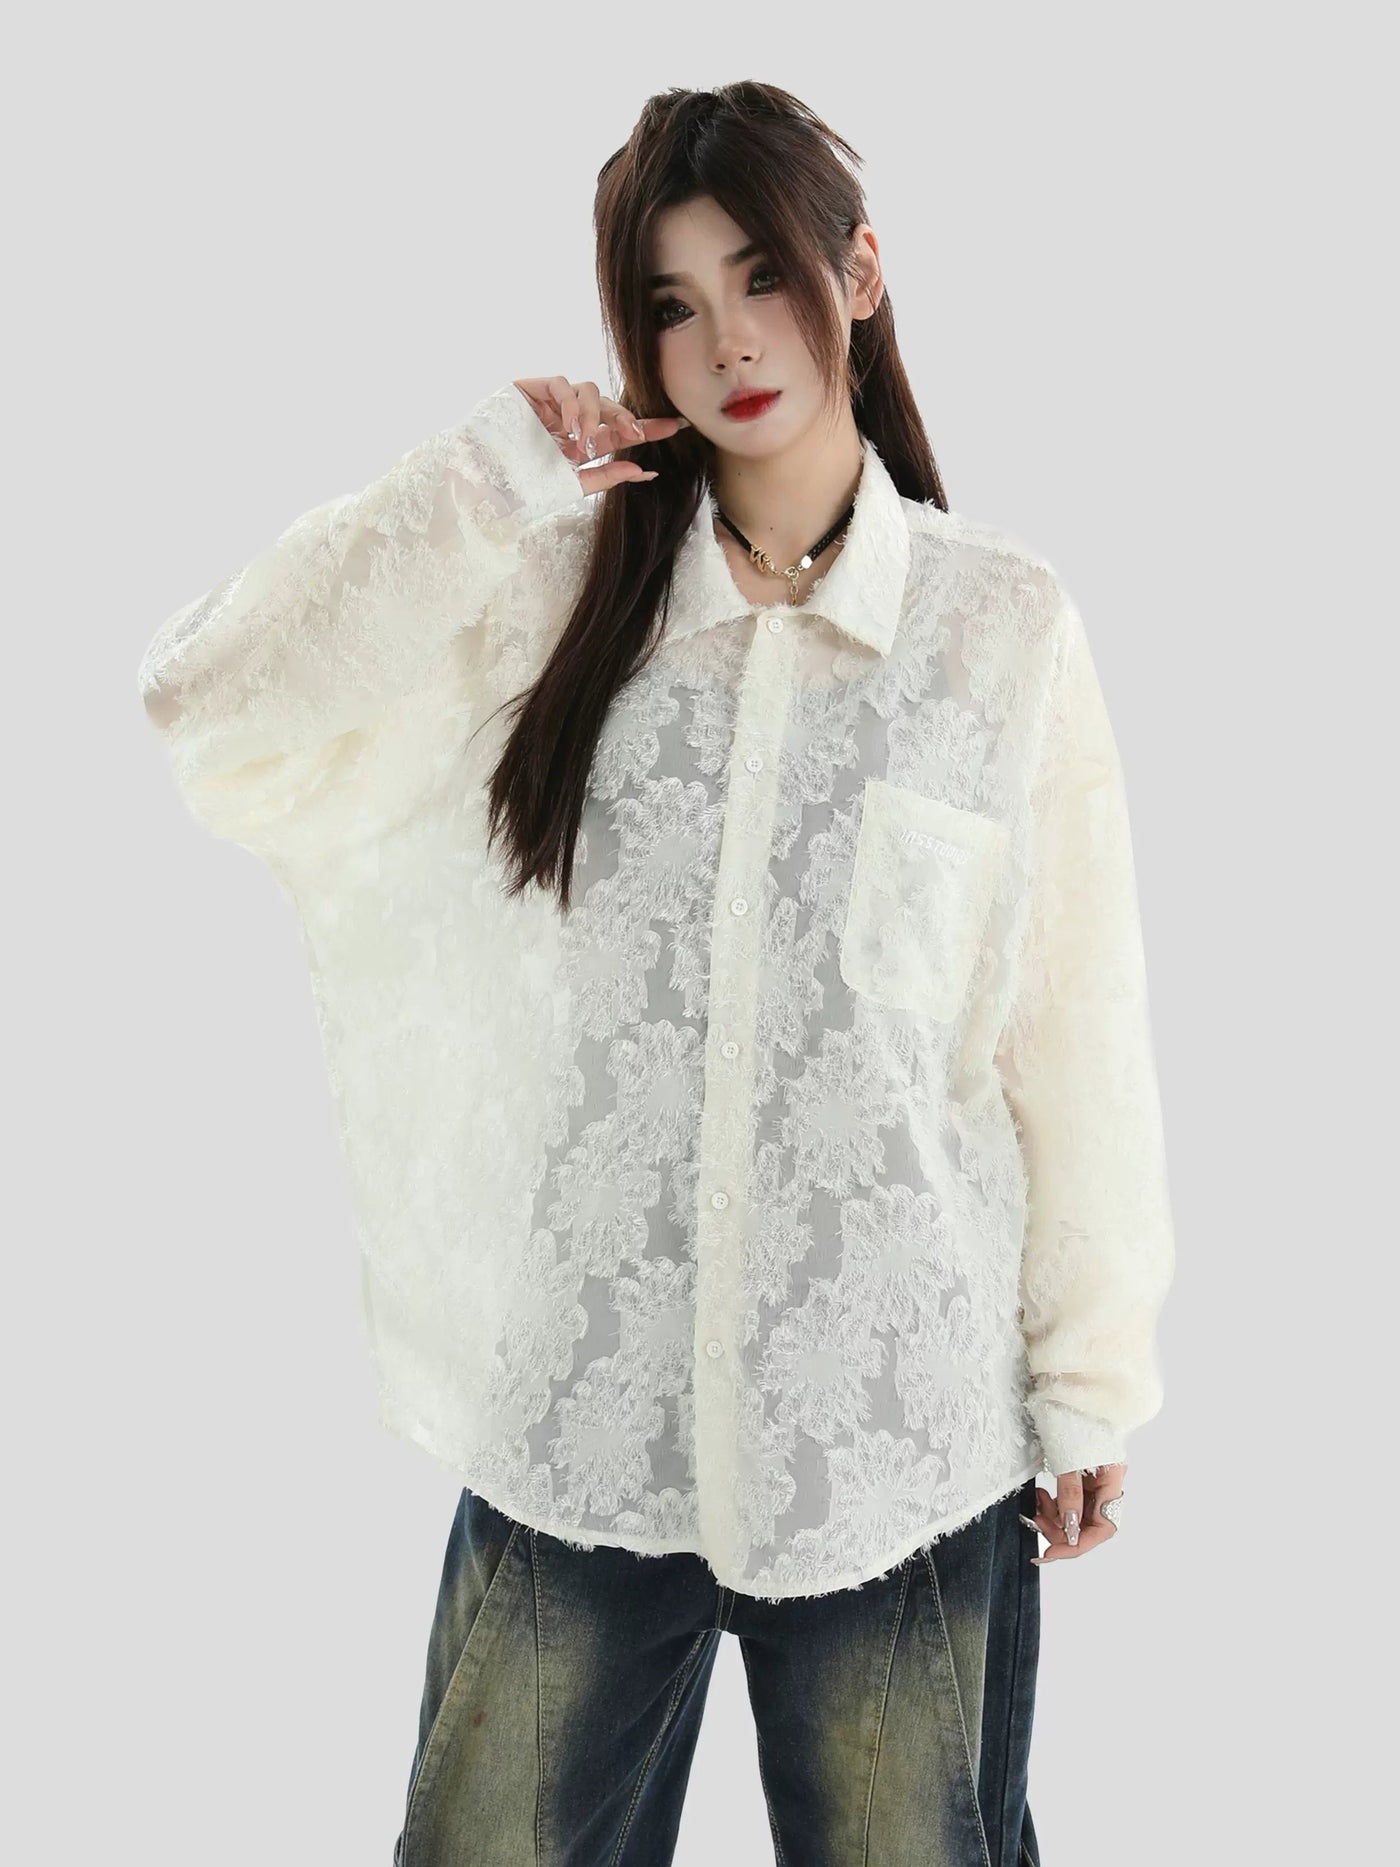 Vintage Frayed Texture Shirt Korean Street Fashion Shirt By INS Korea Shop Online at OH Vault